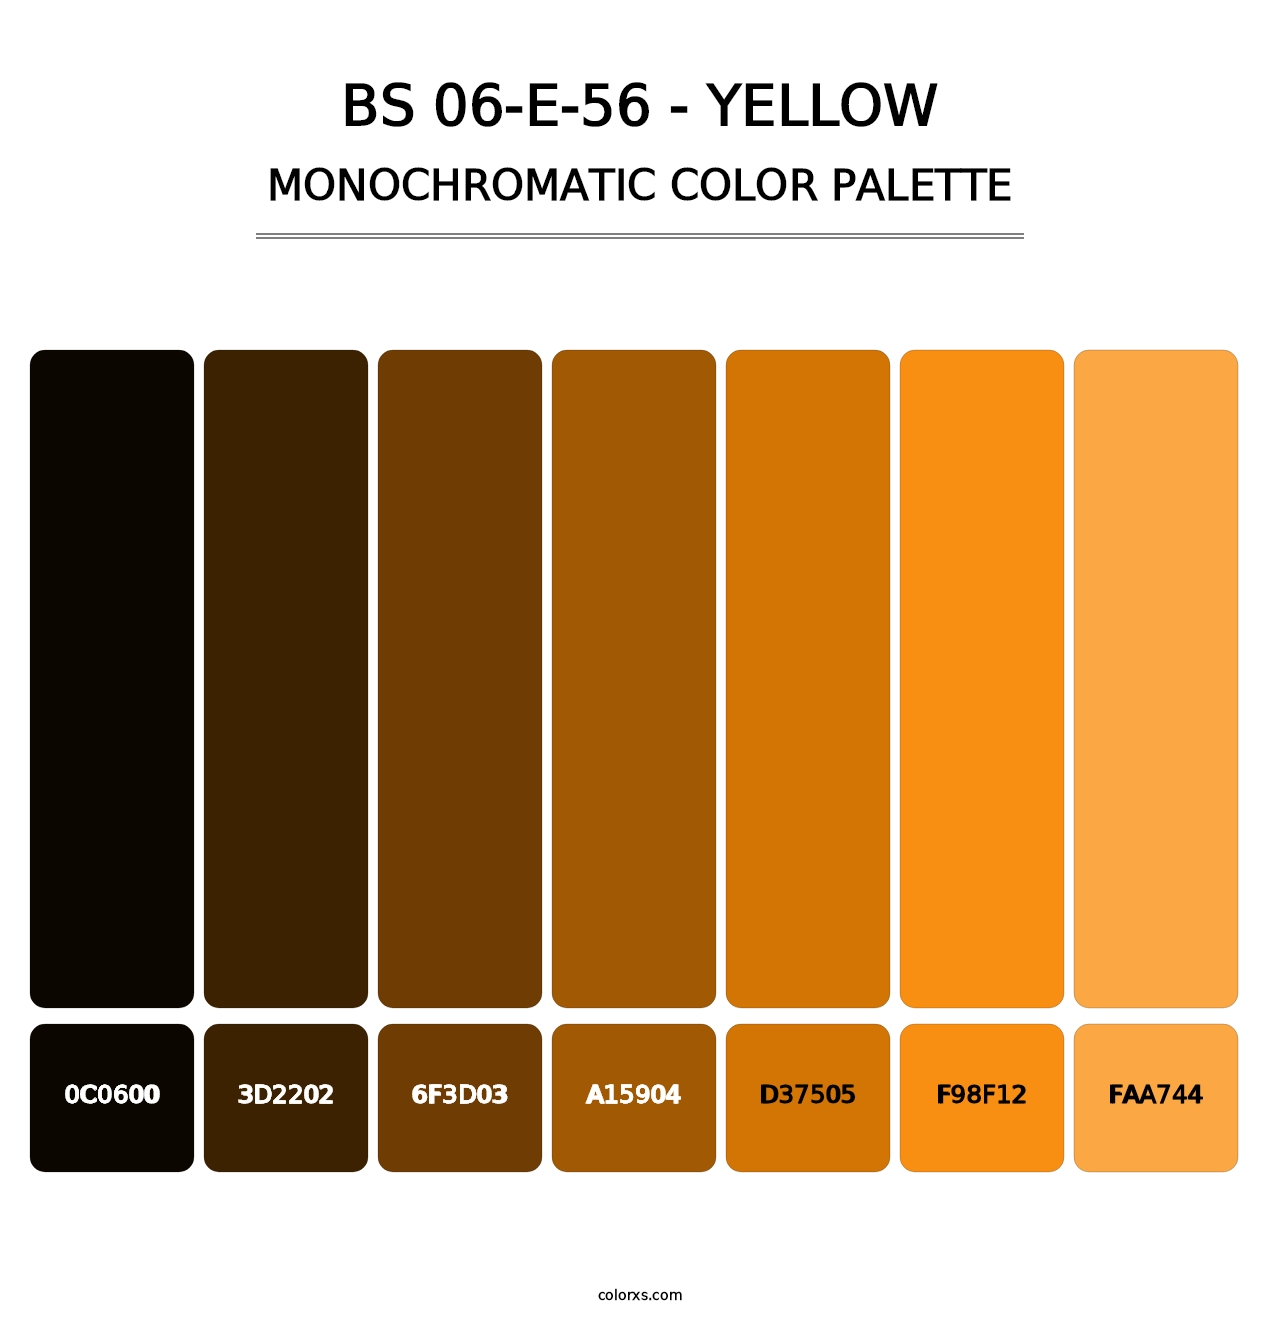 BS 06-E-56 - Yellow - Monochromatic Color Palette